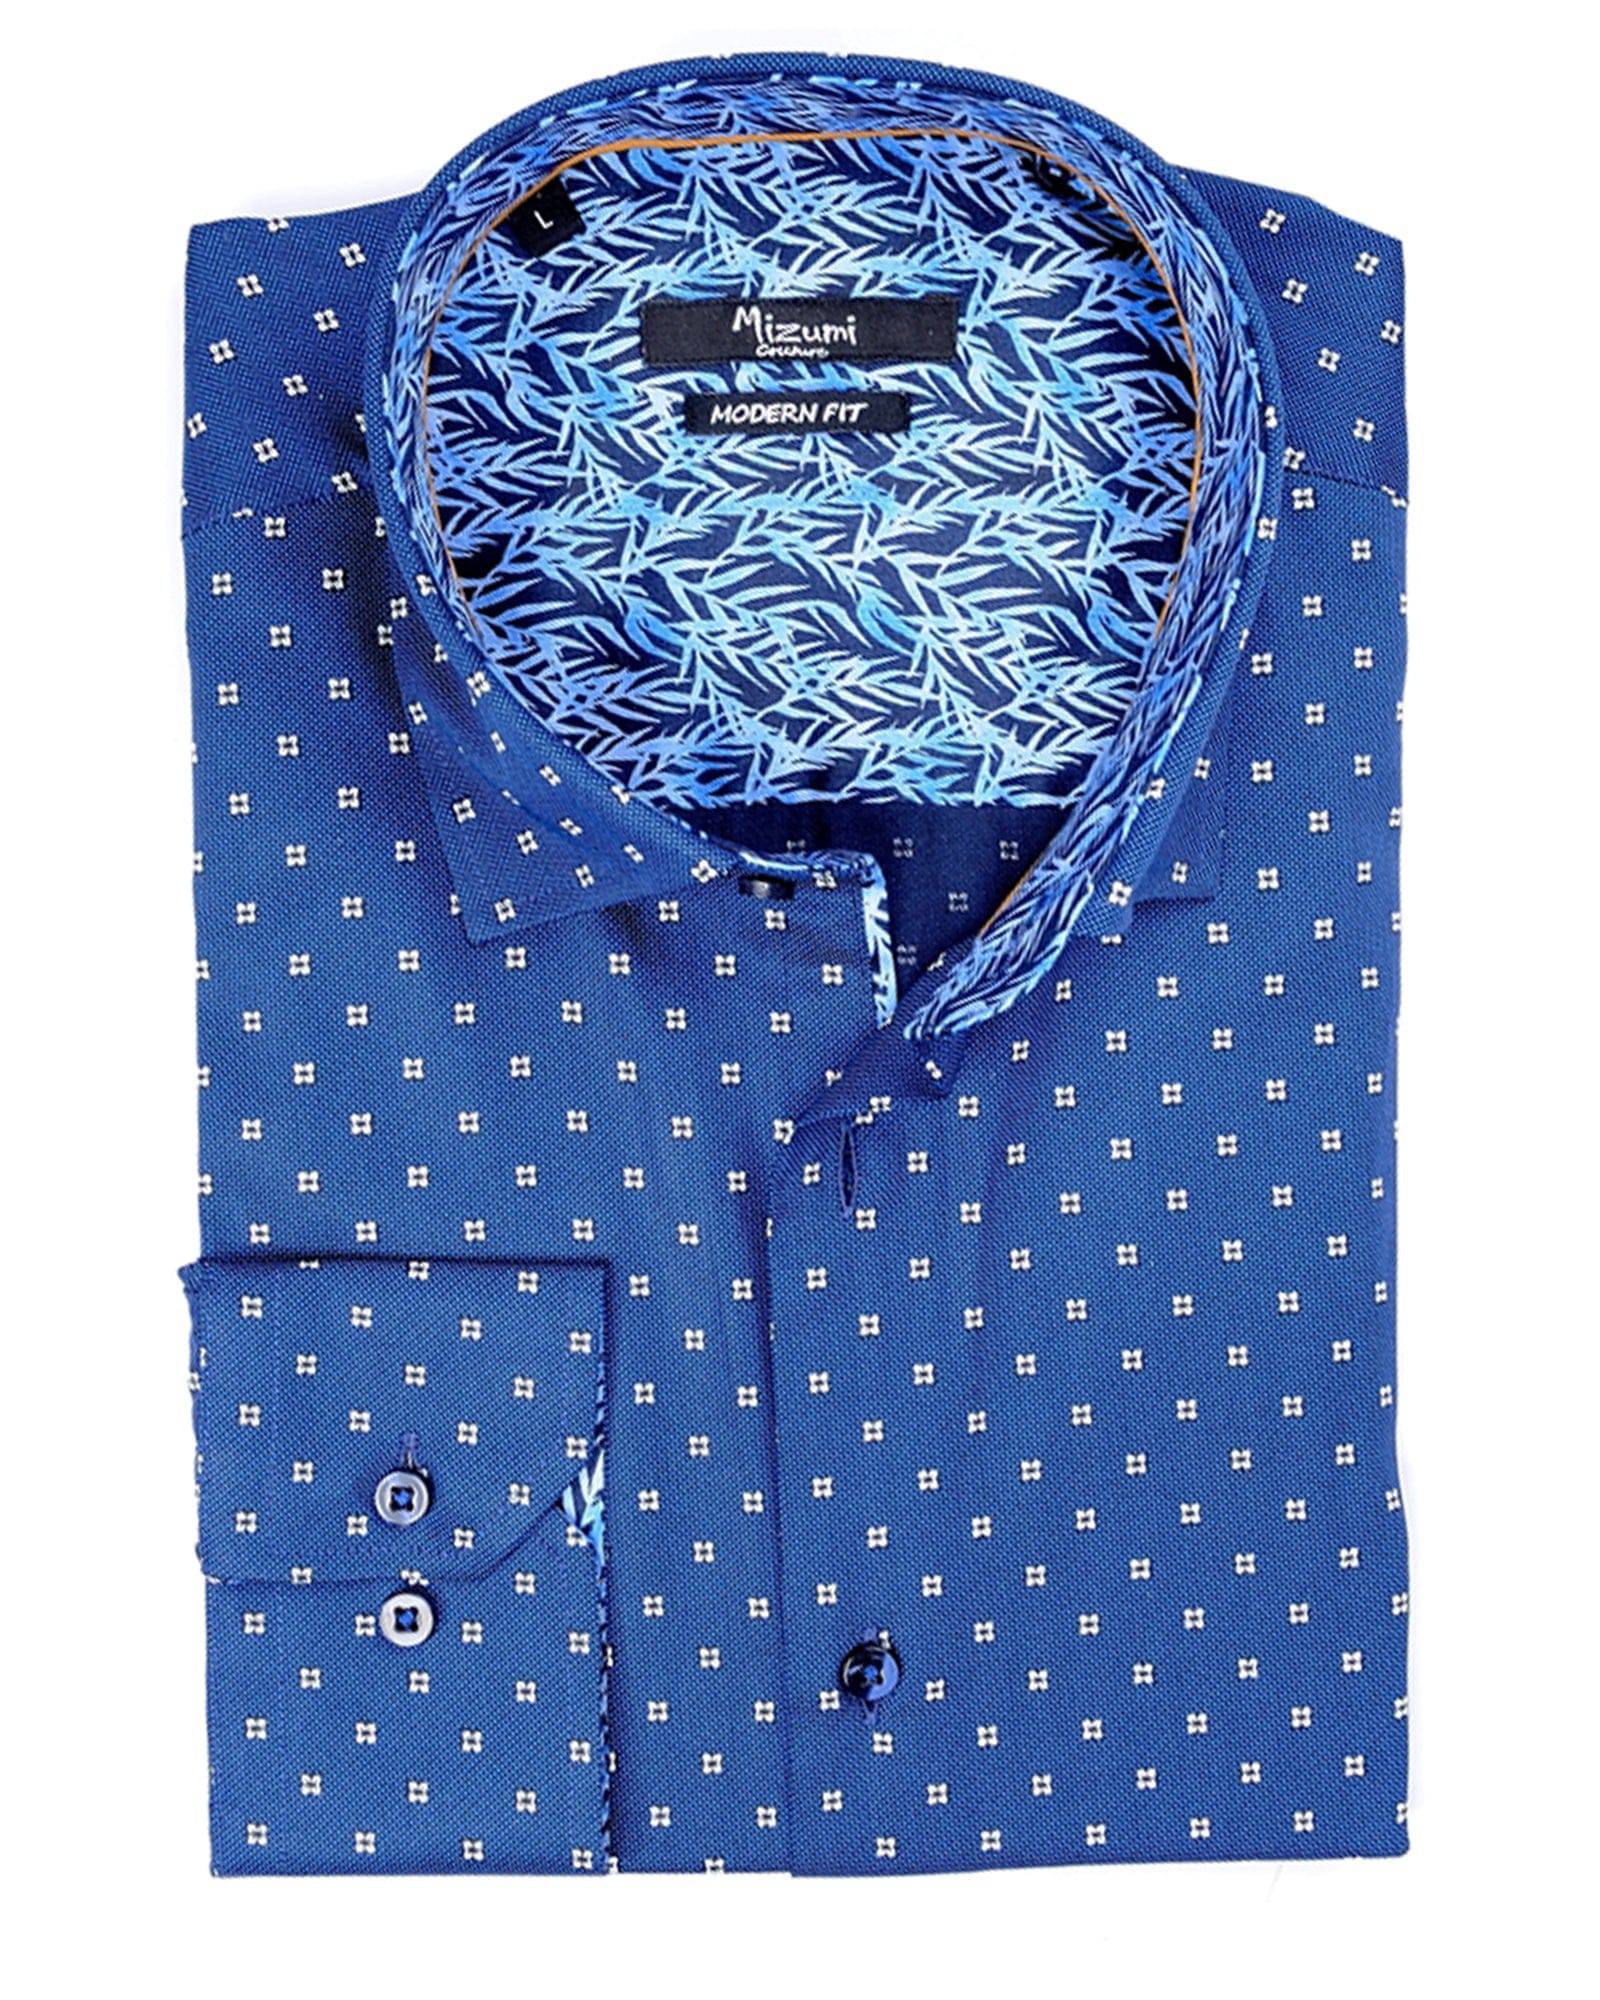 Indigo Blue Foulard Sport Shirt - Rainwater's Men's Clothing and Tuxedo Rental